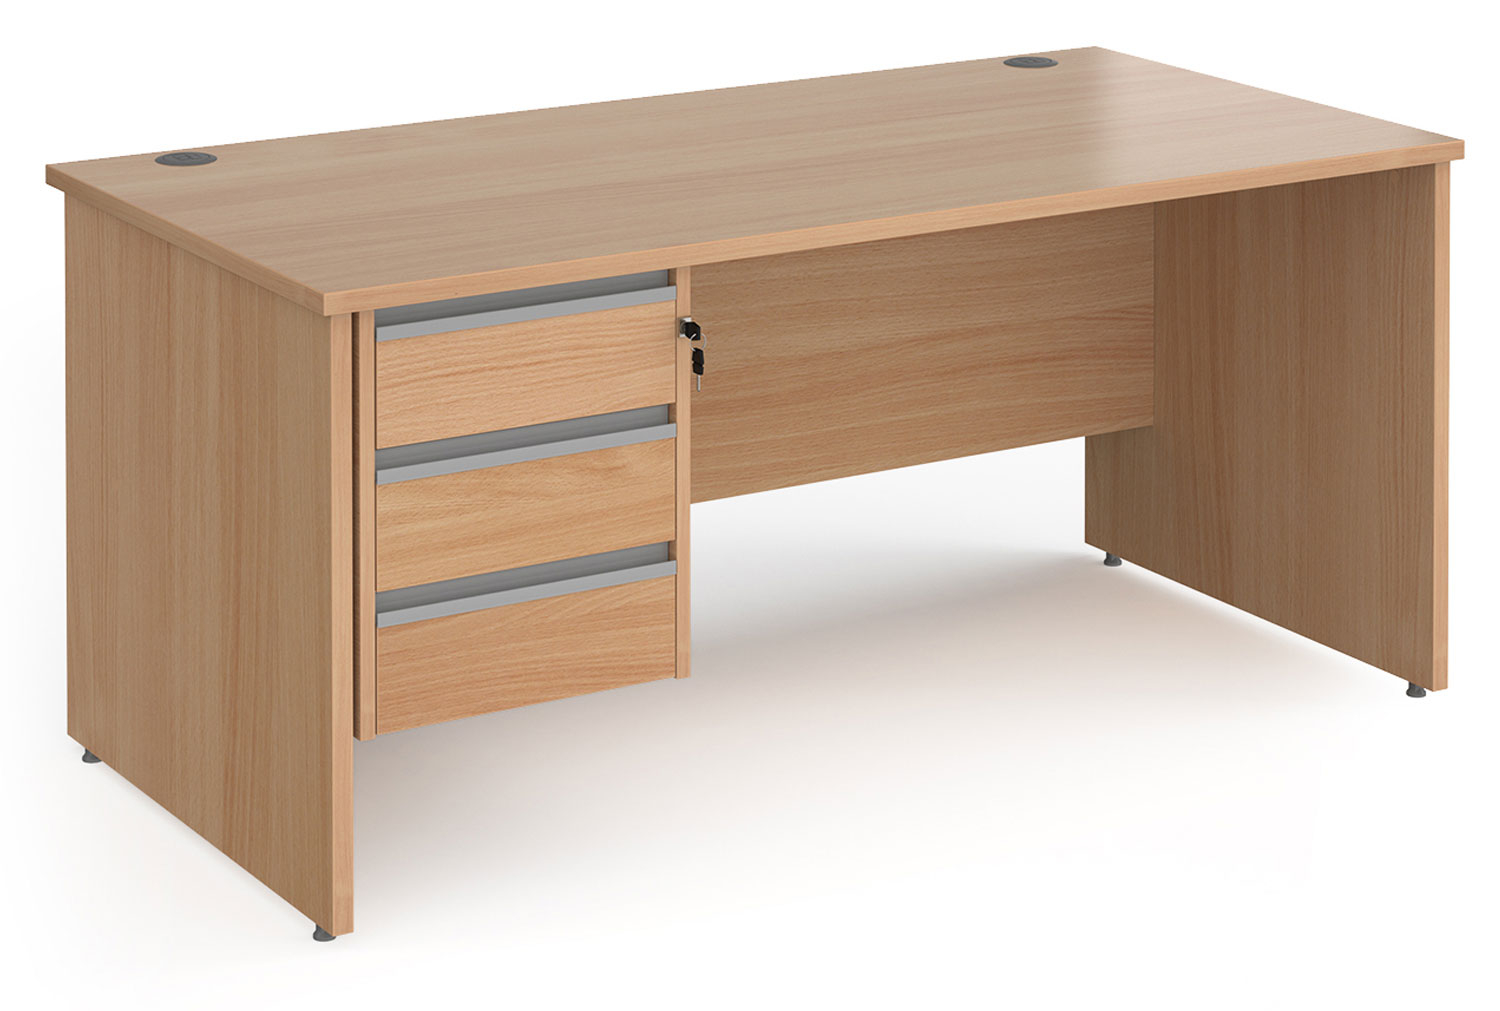 Value Line Classic+ Panel End Office Desk 3 Drawers (Silver Slats), 160wx80dx73h (cm), Beech